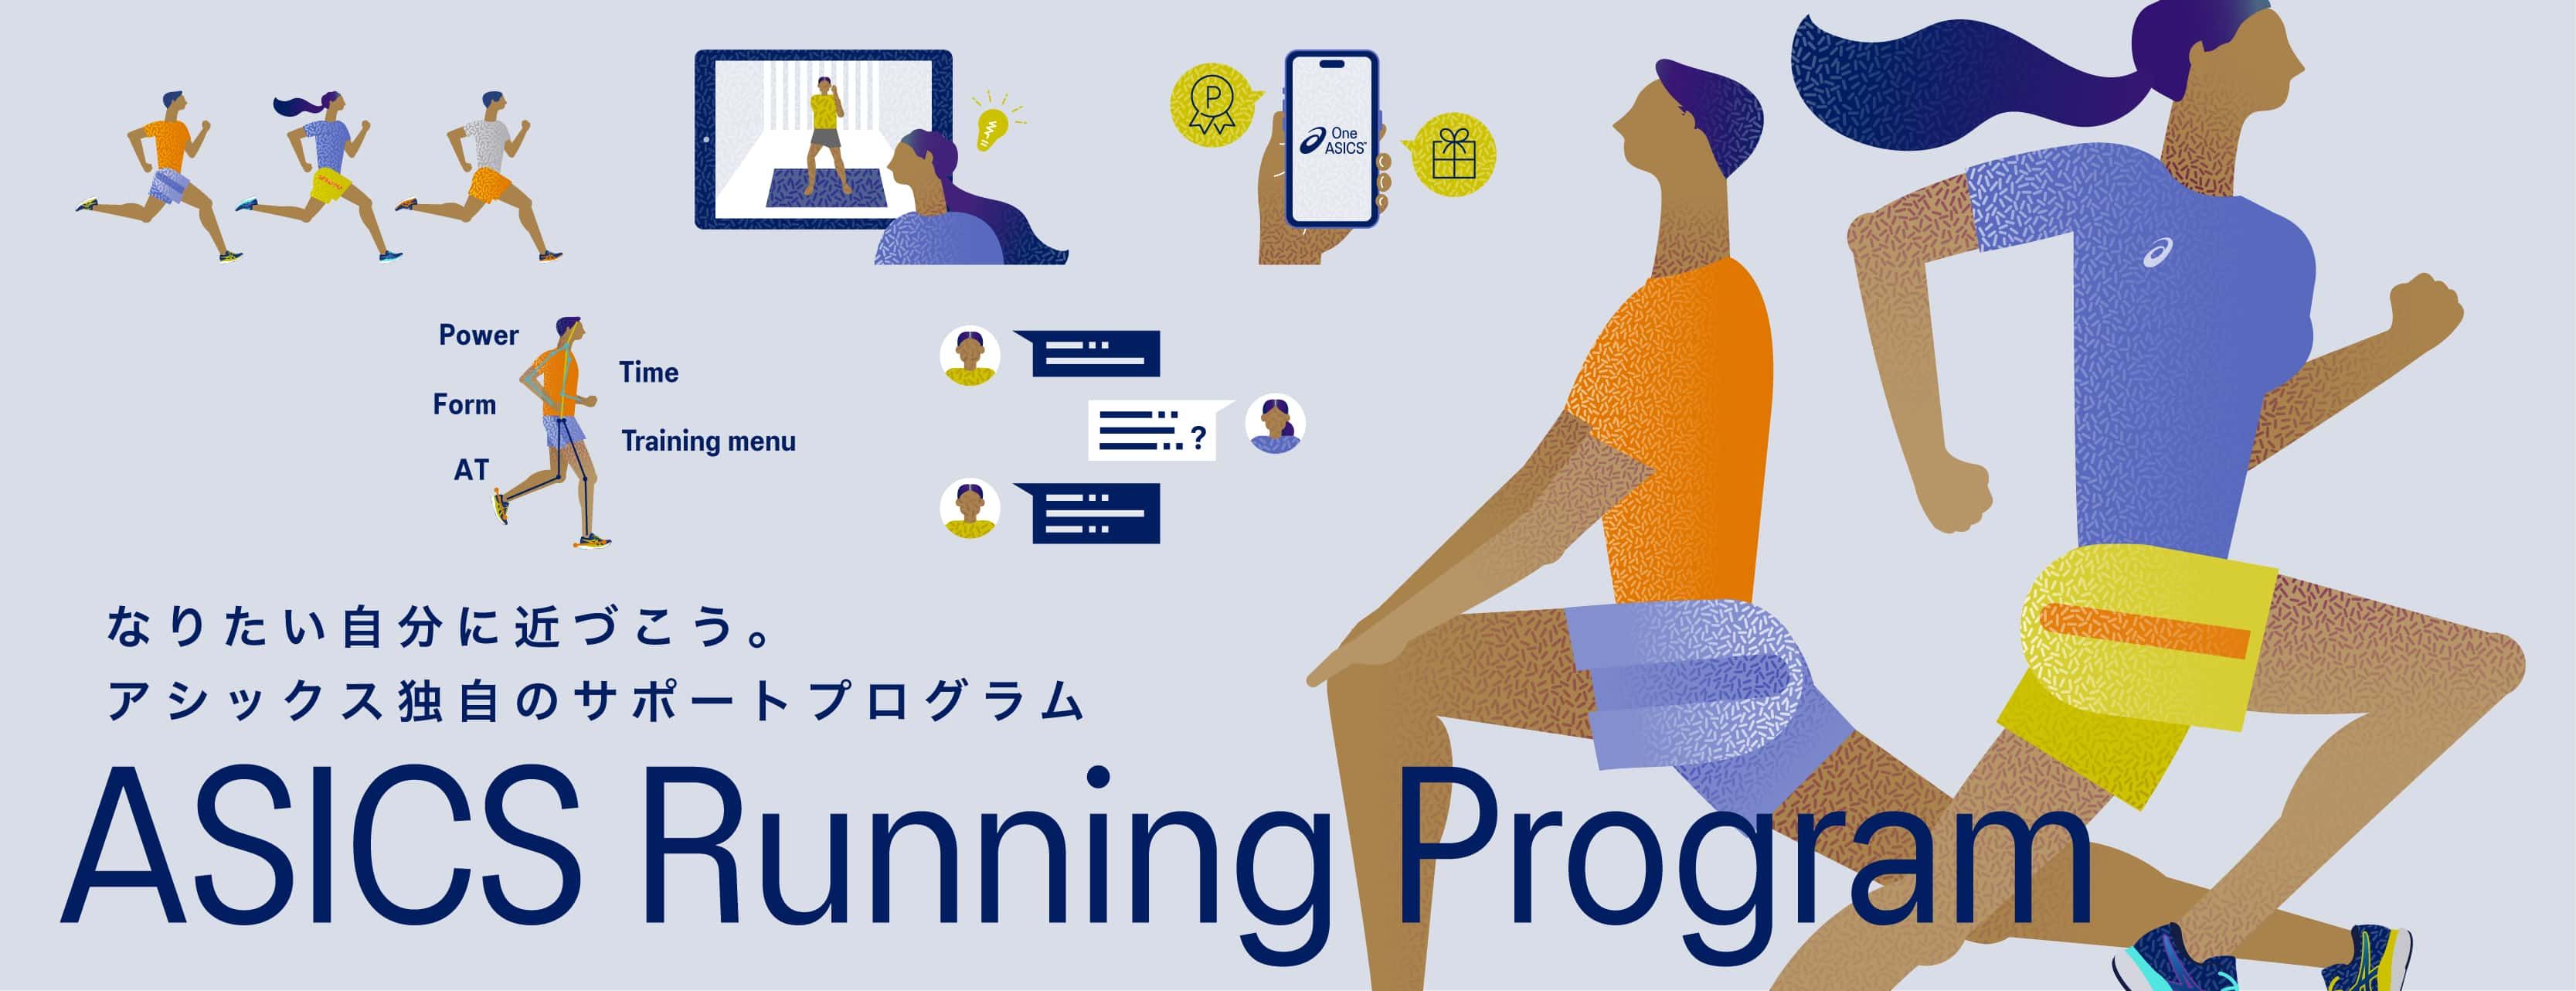 ASICS Running Program